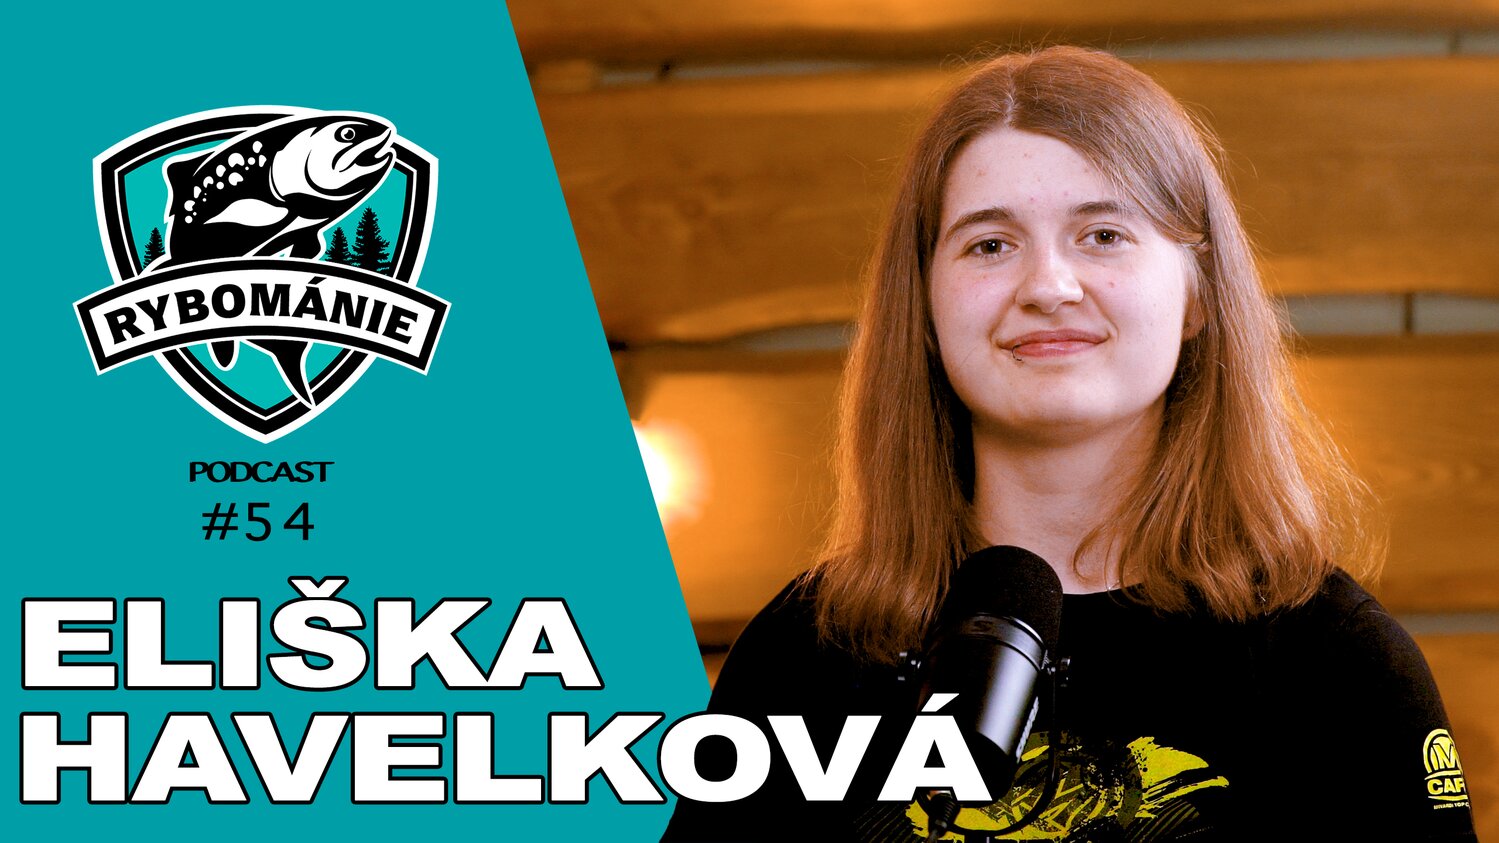 Kaprařka každým coulem! To je Eliška Havelková v podcastu RYBOMÁNIE #54